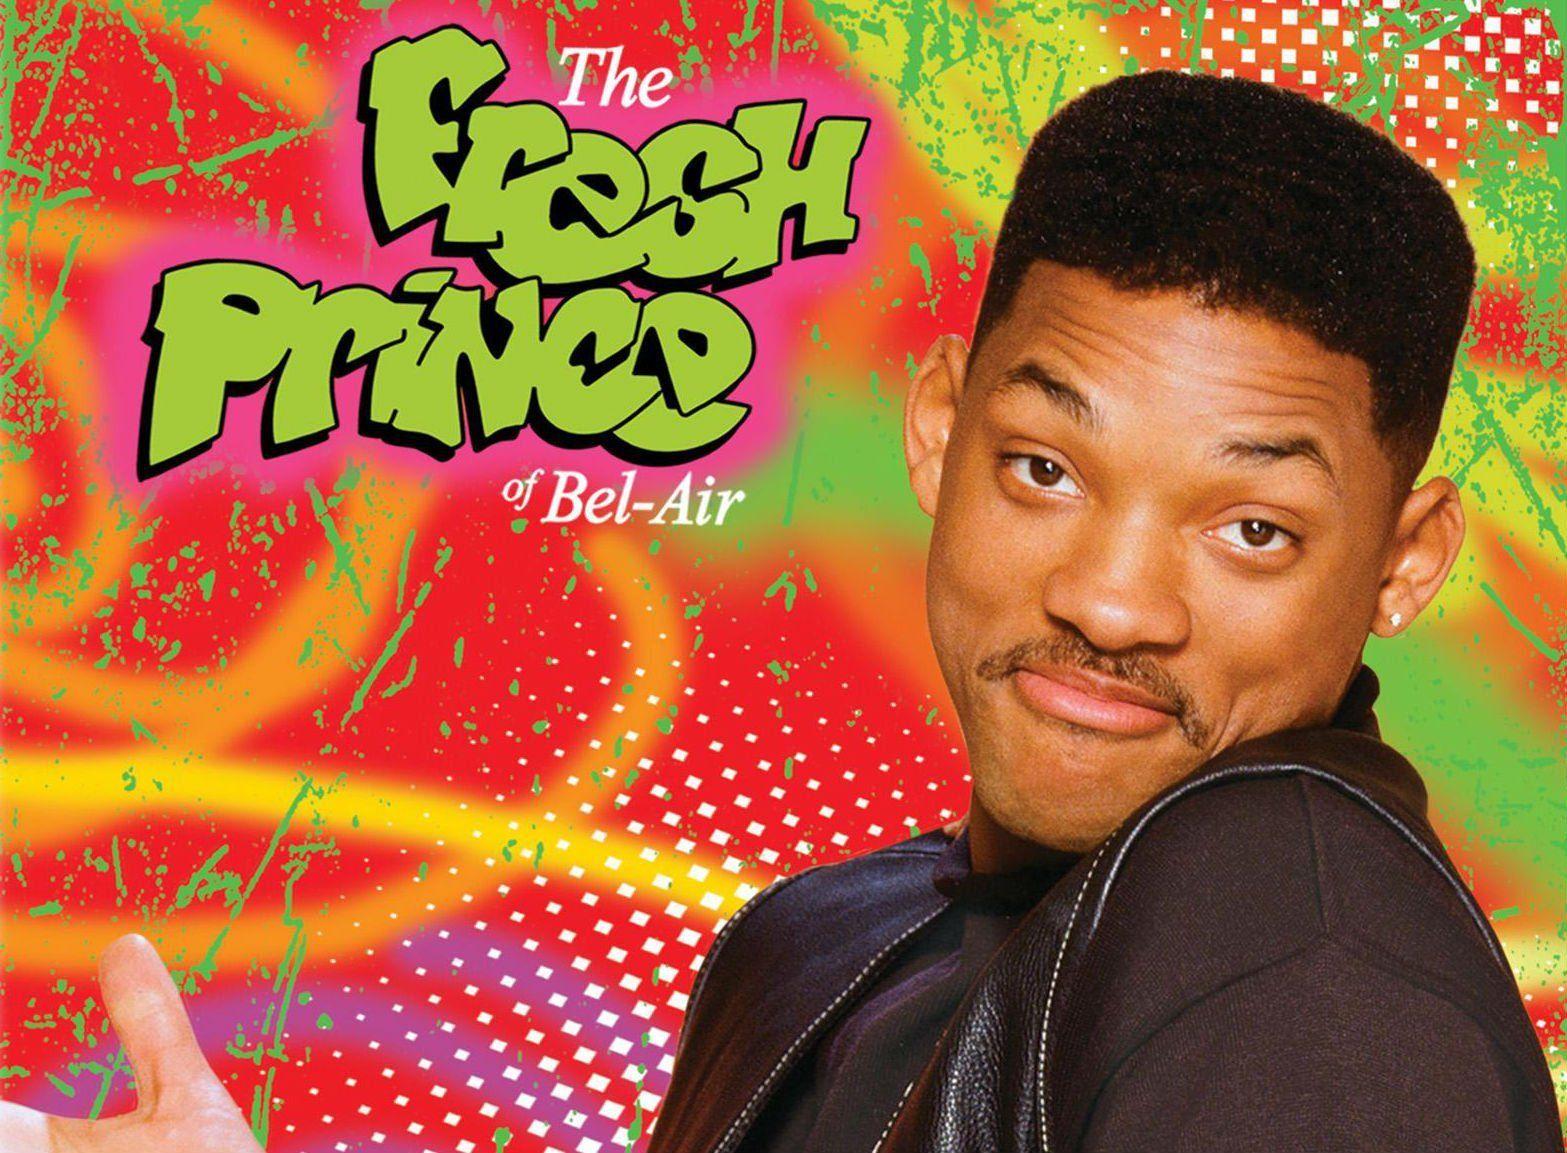 fresh prince of bel air episodes free